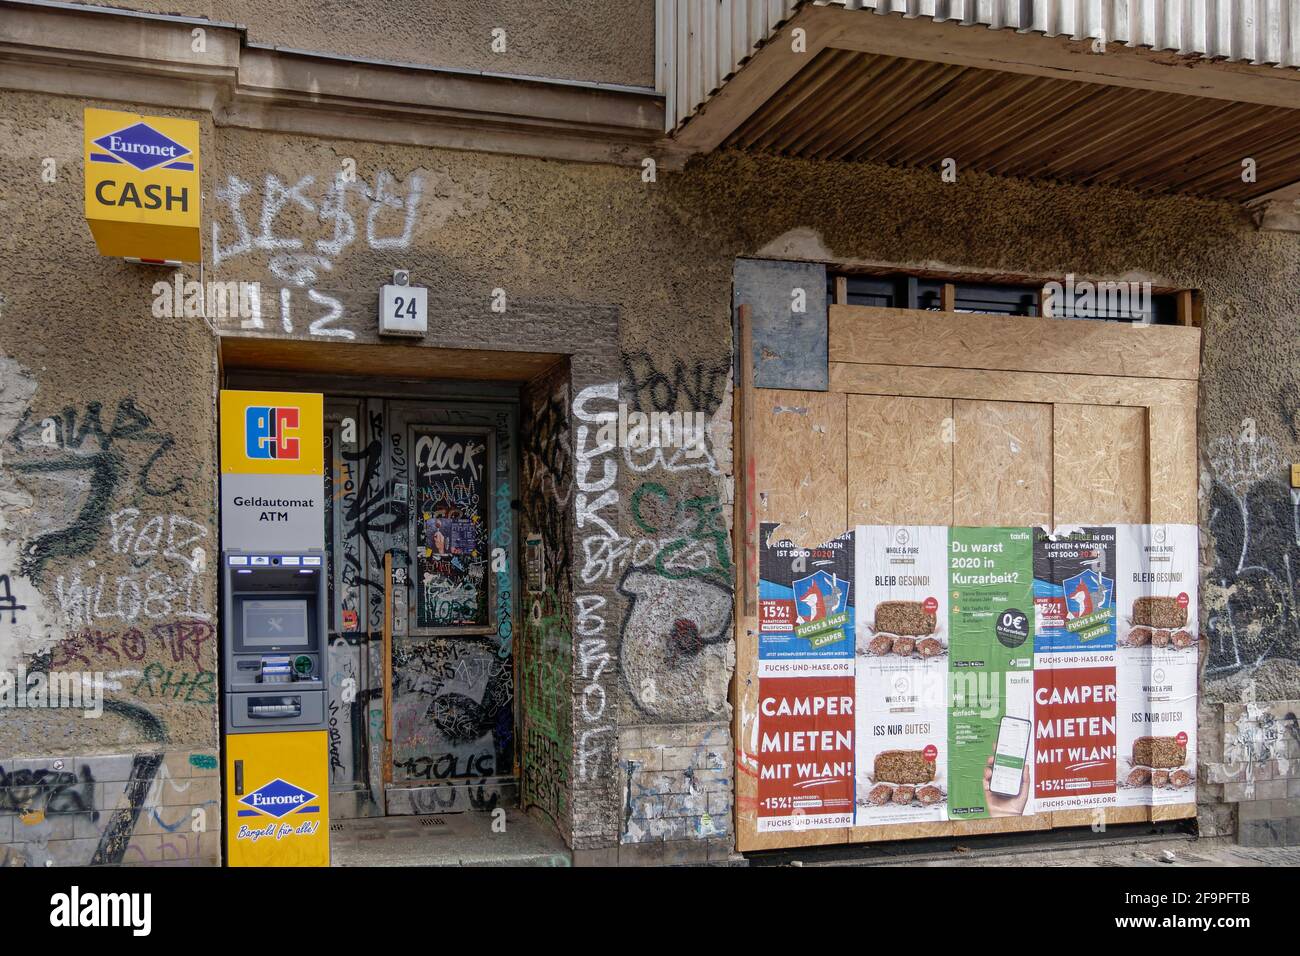 Geldautomat im Hauseingang, ATM, Cash, Bargeld Auszahlung, Kreuzberg, Berlin Stock Photo